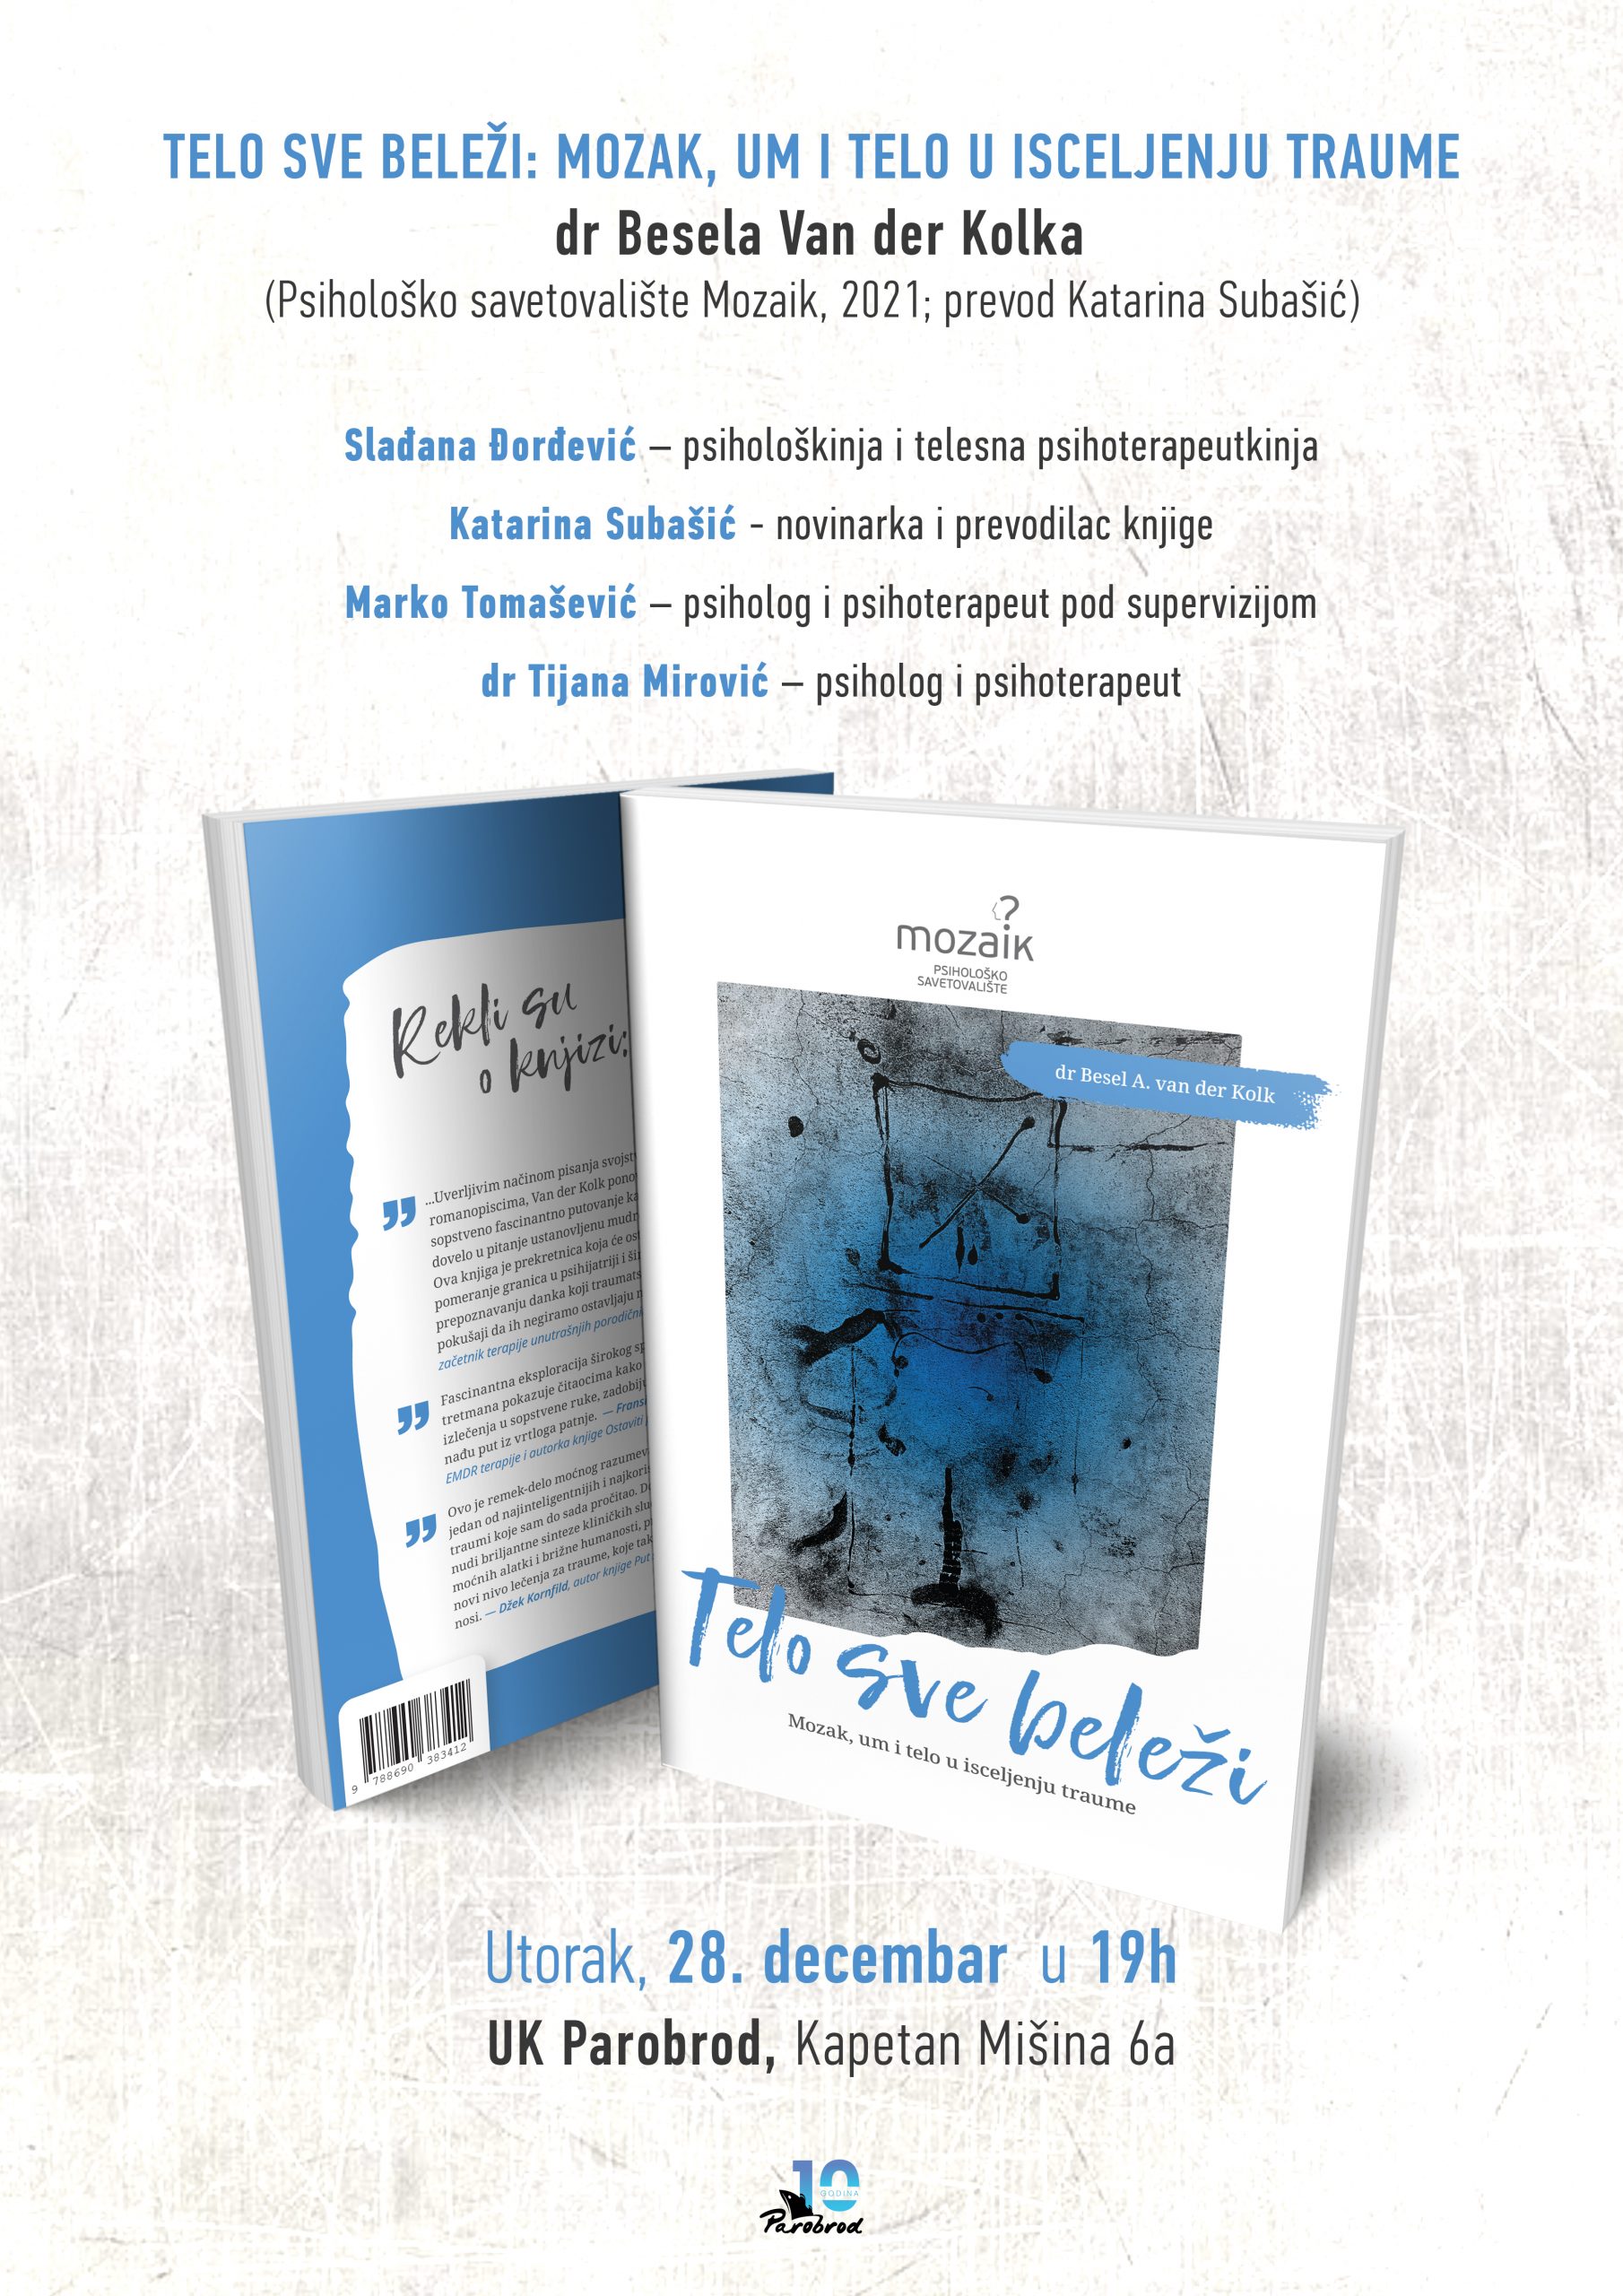 Promocija knjige “Telo sve beleži: Mozak, um i telo u isceljenju traume”, dr Besela Van der Kolka